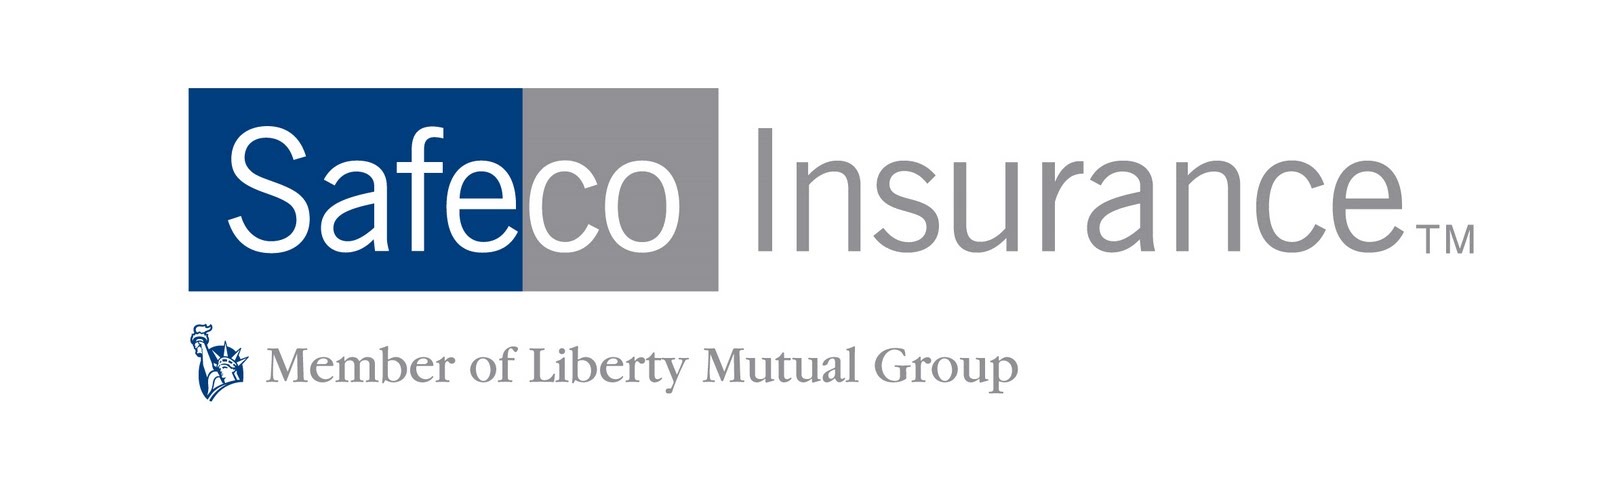 Safeco Insurance Logo photo - 1